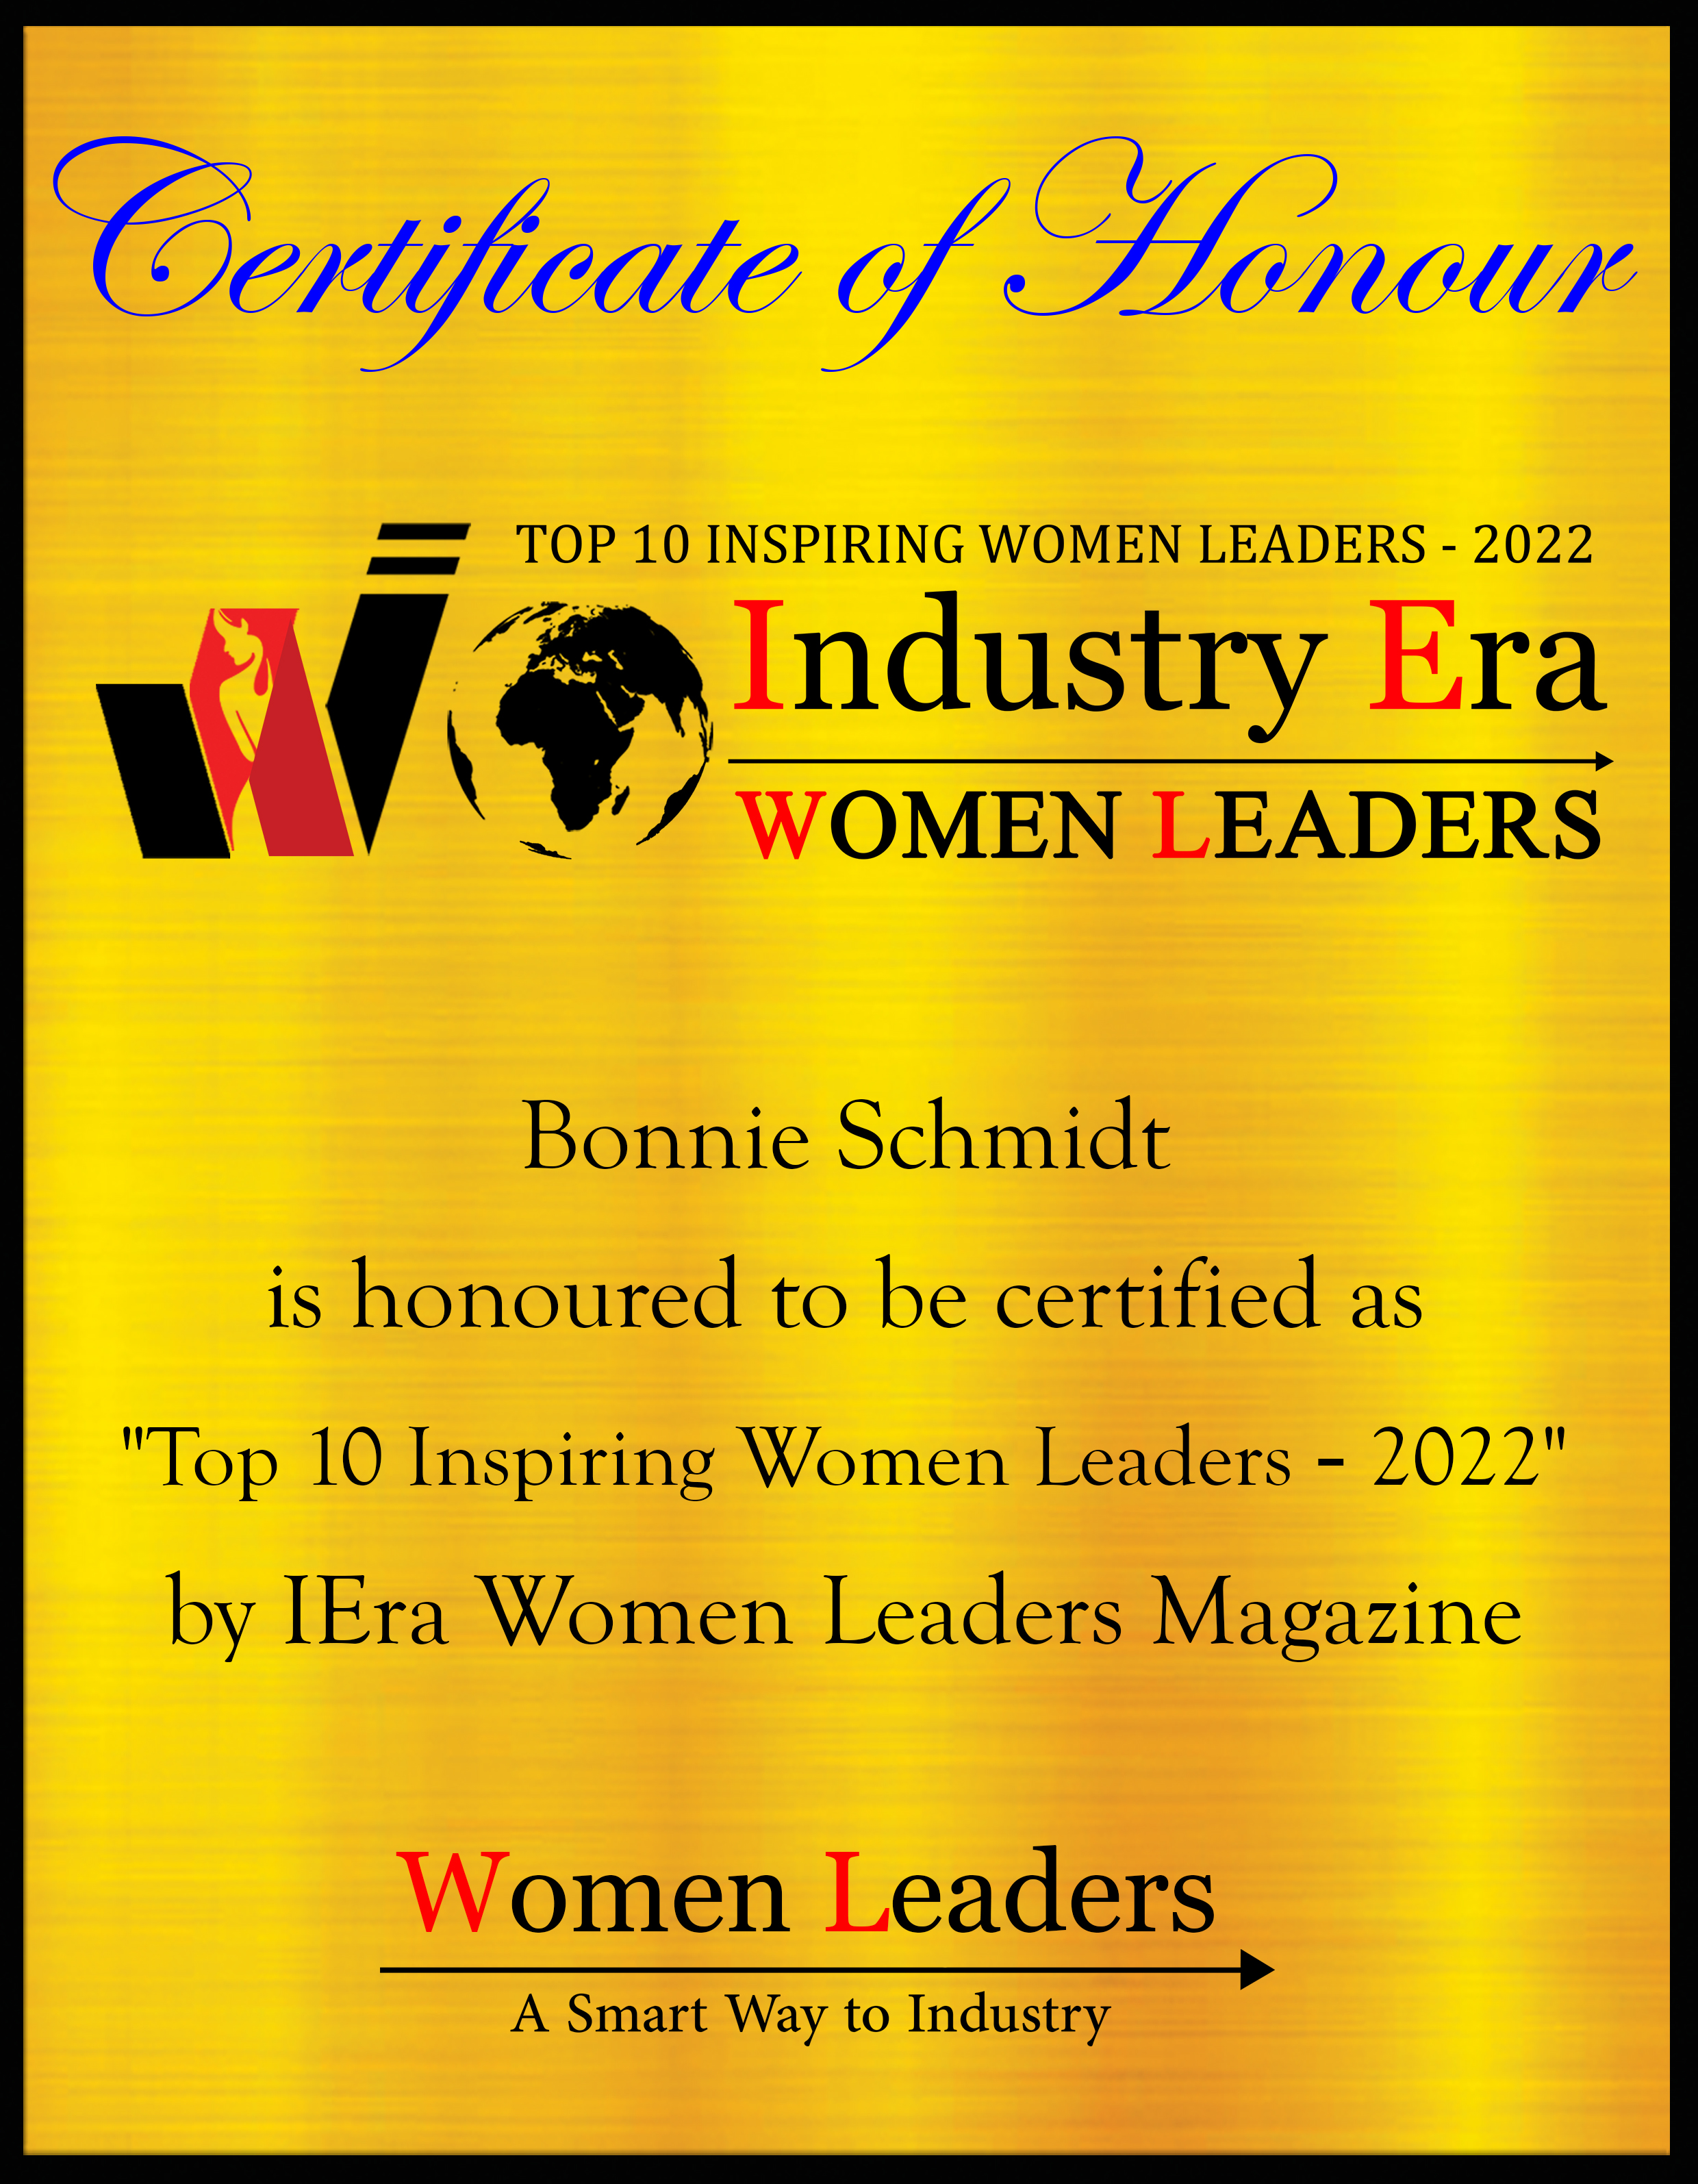 Dr. Bonnie Schmidt, Founder & President of Let’s Talk Science, Top 10 Inspiring Women Leaders of 2022